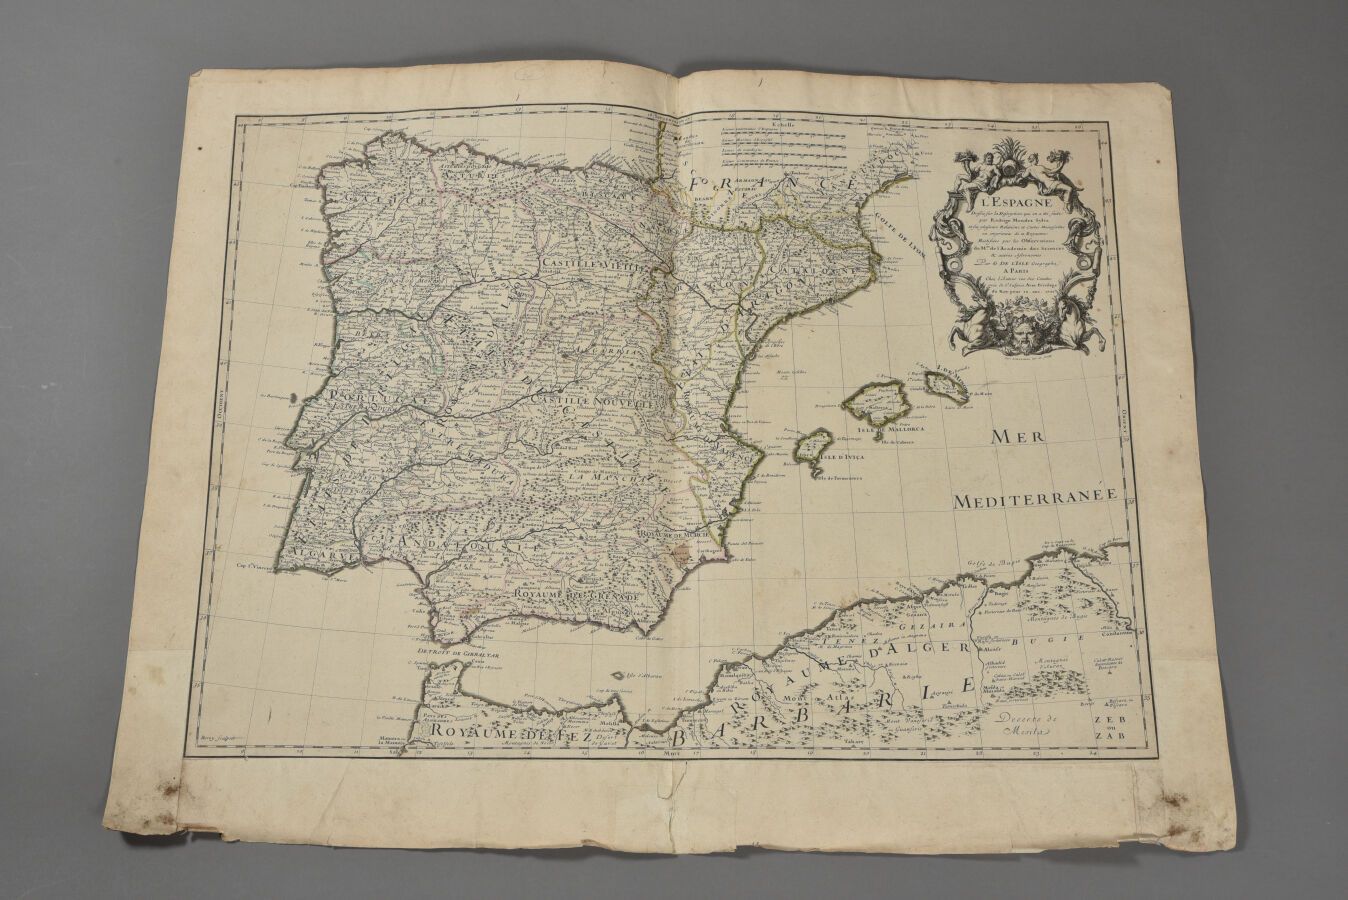 Null 纪尧姆-德利斯勒
(法国，18世纪)
西班牙地图。1720. 
双开本。
该地图已被安装。 
有些缺陷（加固带等）。